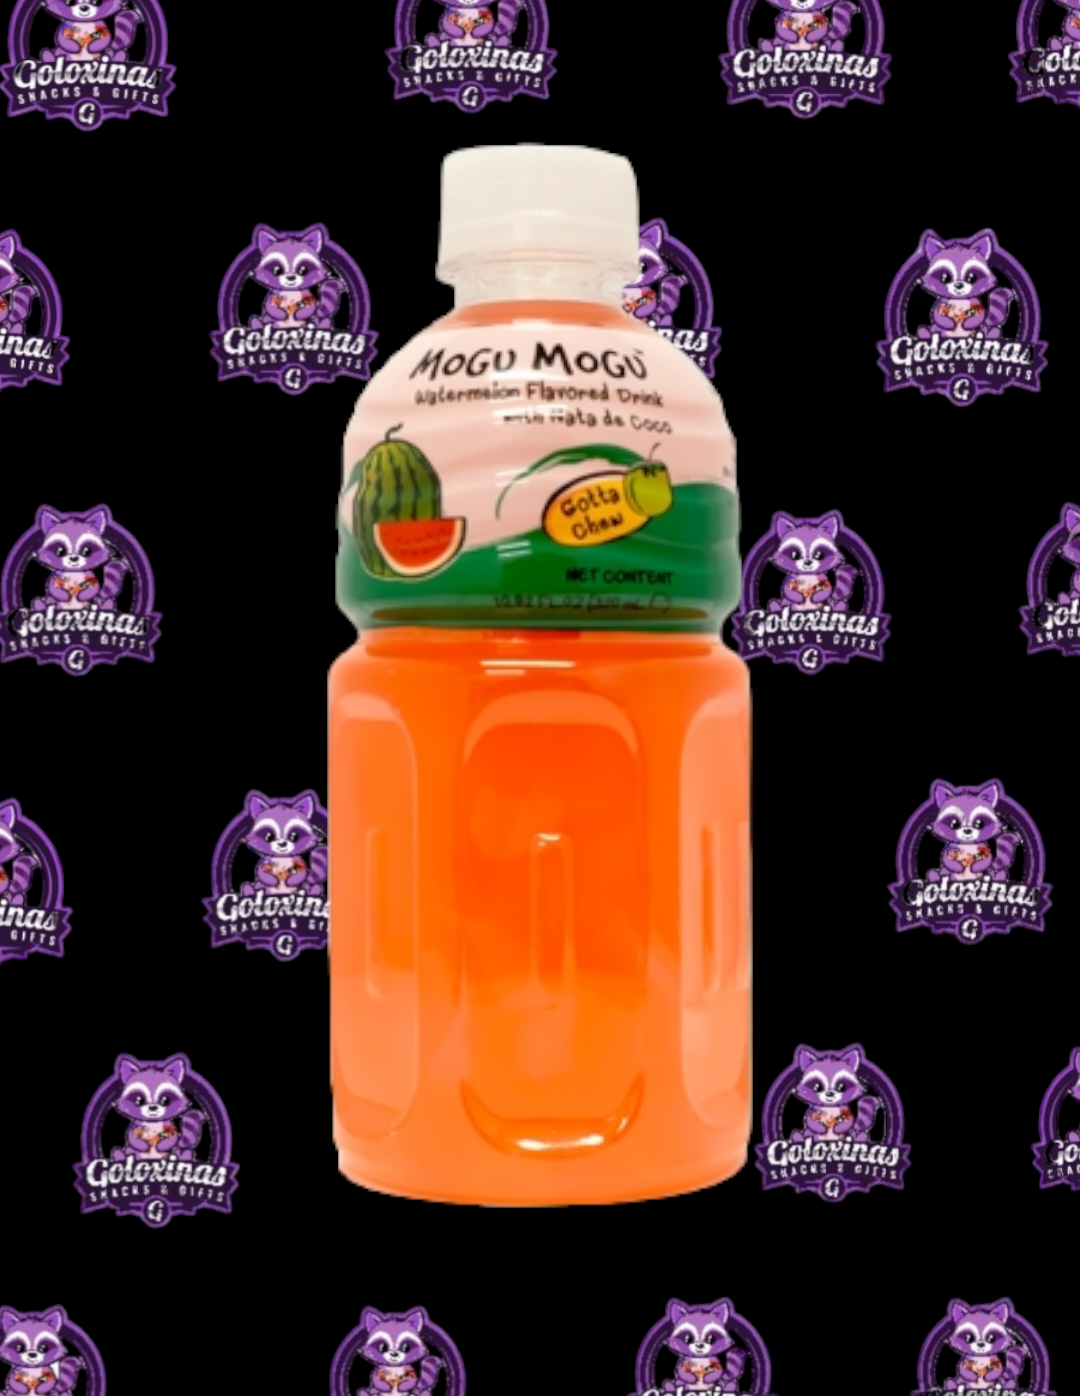 Mogu Mogu Flavored Drink with Coconut Jelly